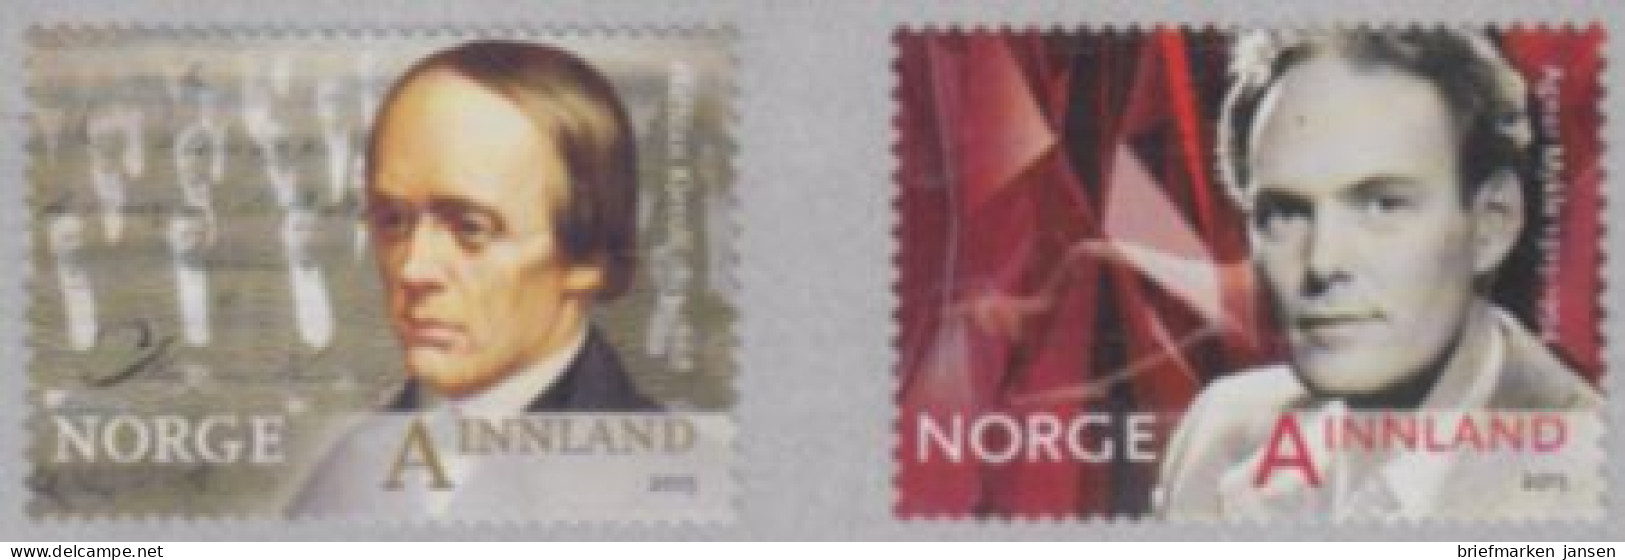 Norwegen Mi.Nr. 1890-91 Halfdan Kjerulf, Agnar Mykle, Skl. (2 Werte) - Nuevos